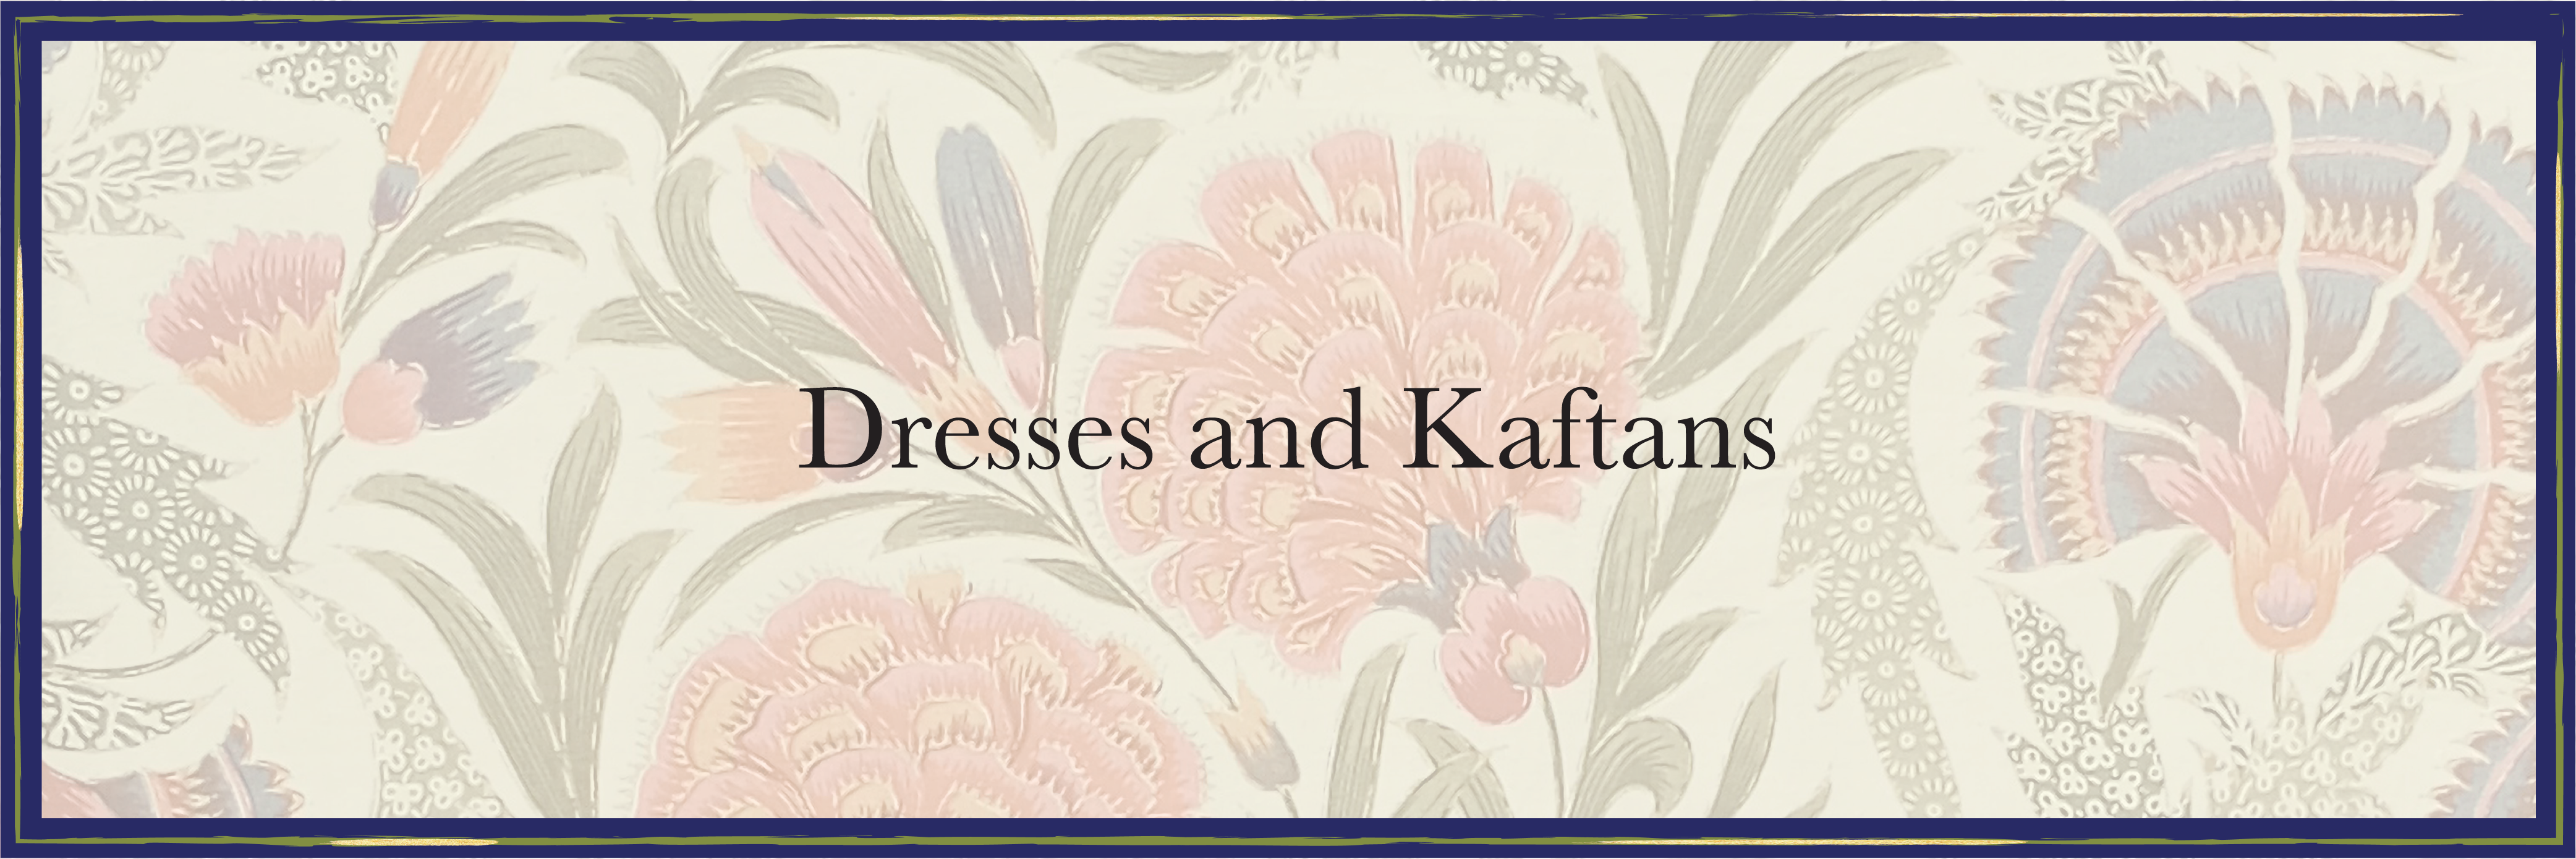 Dresses and Kaftans